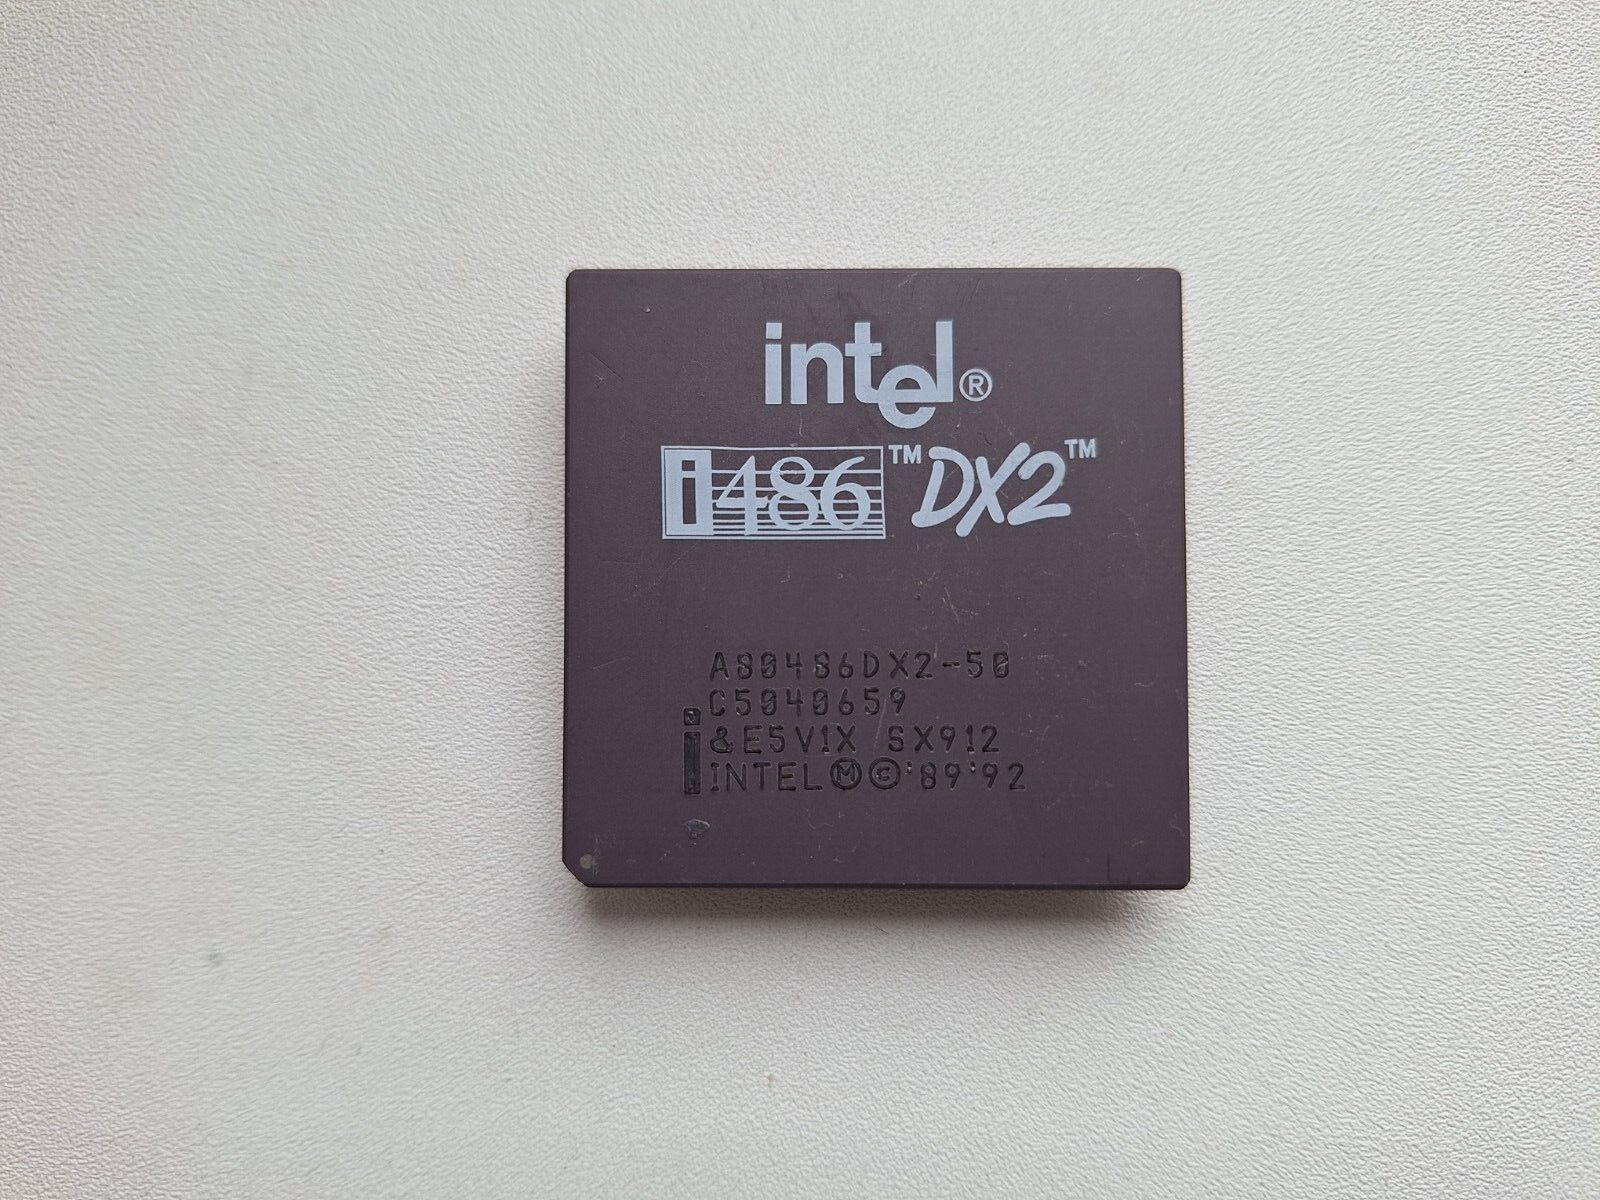 486DX2-50 Intel A80486DX2-50 SX912 vintage CPU GOLD